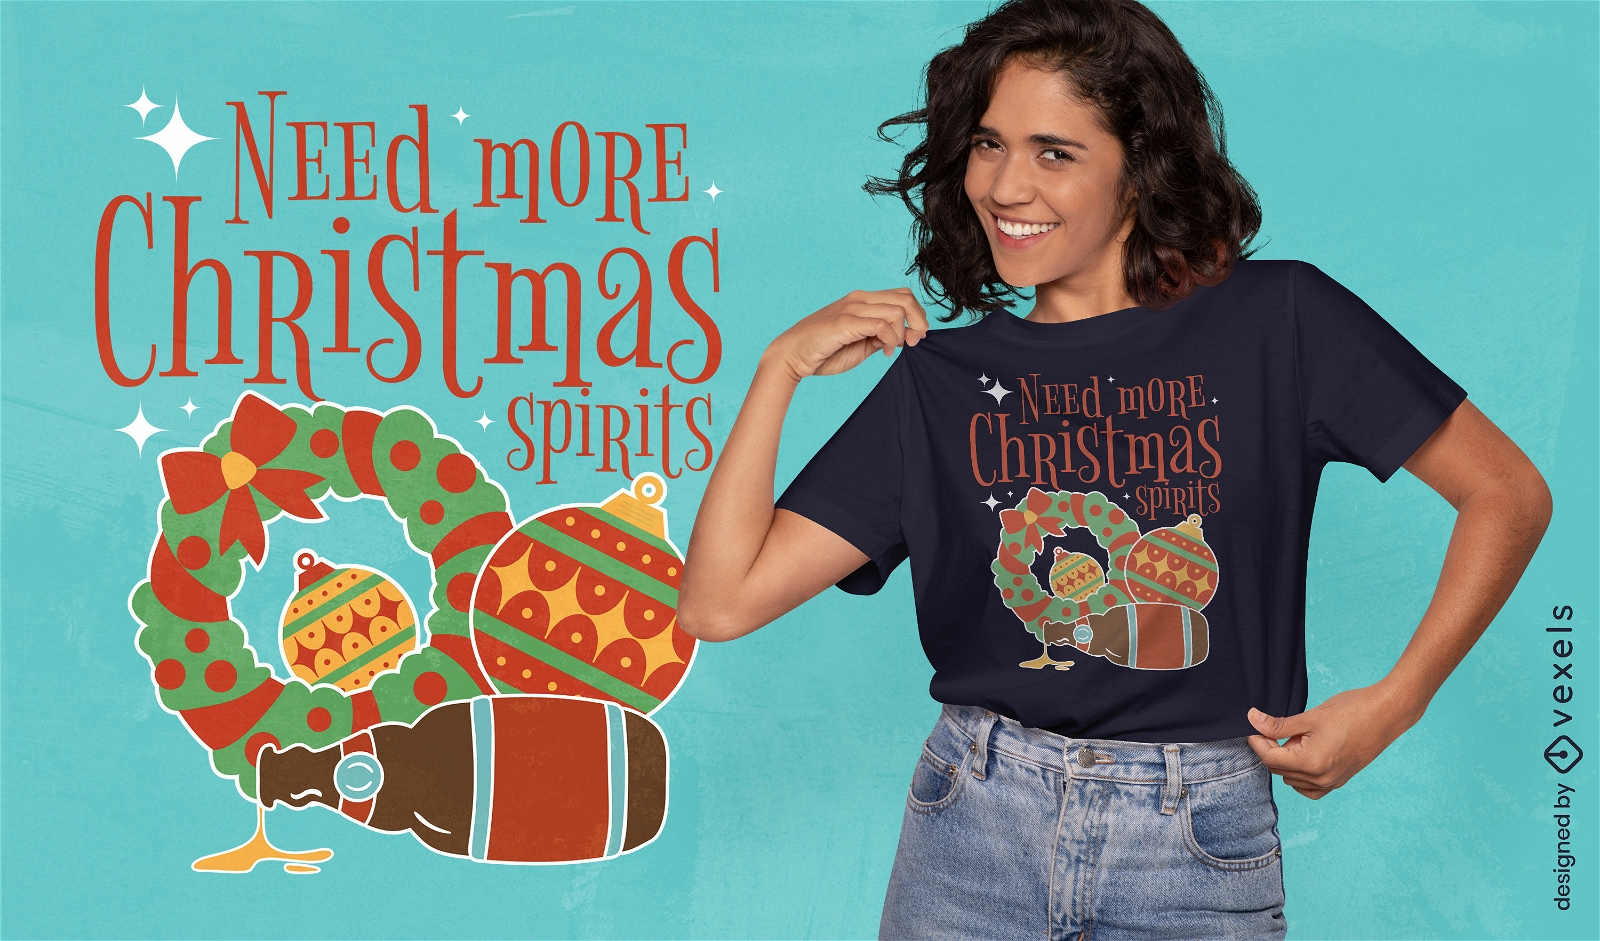 Christmas spirits quote t-shirt design